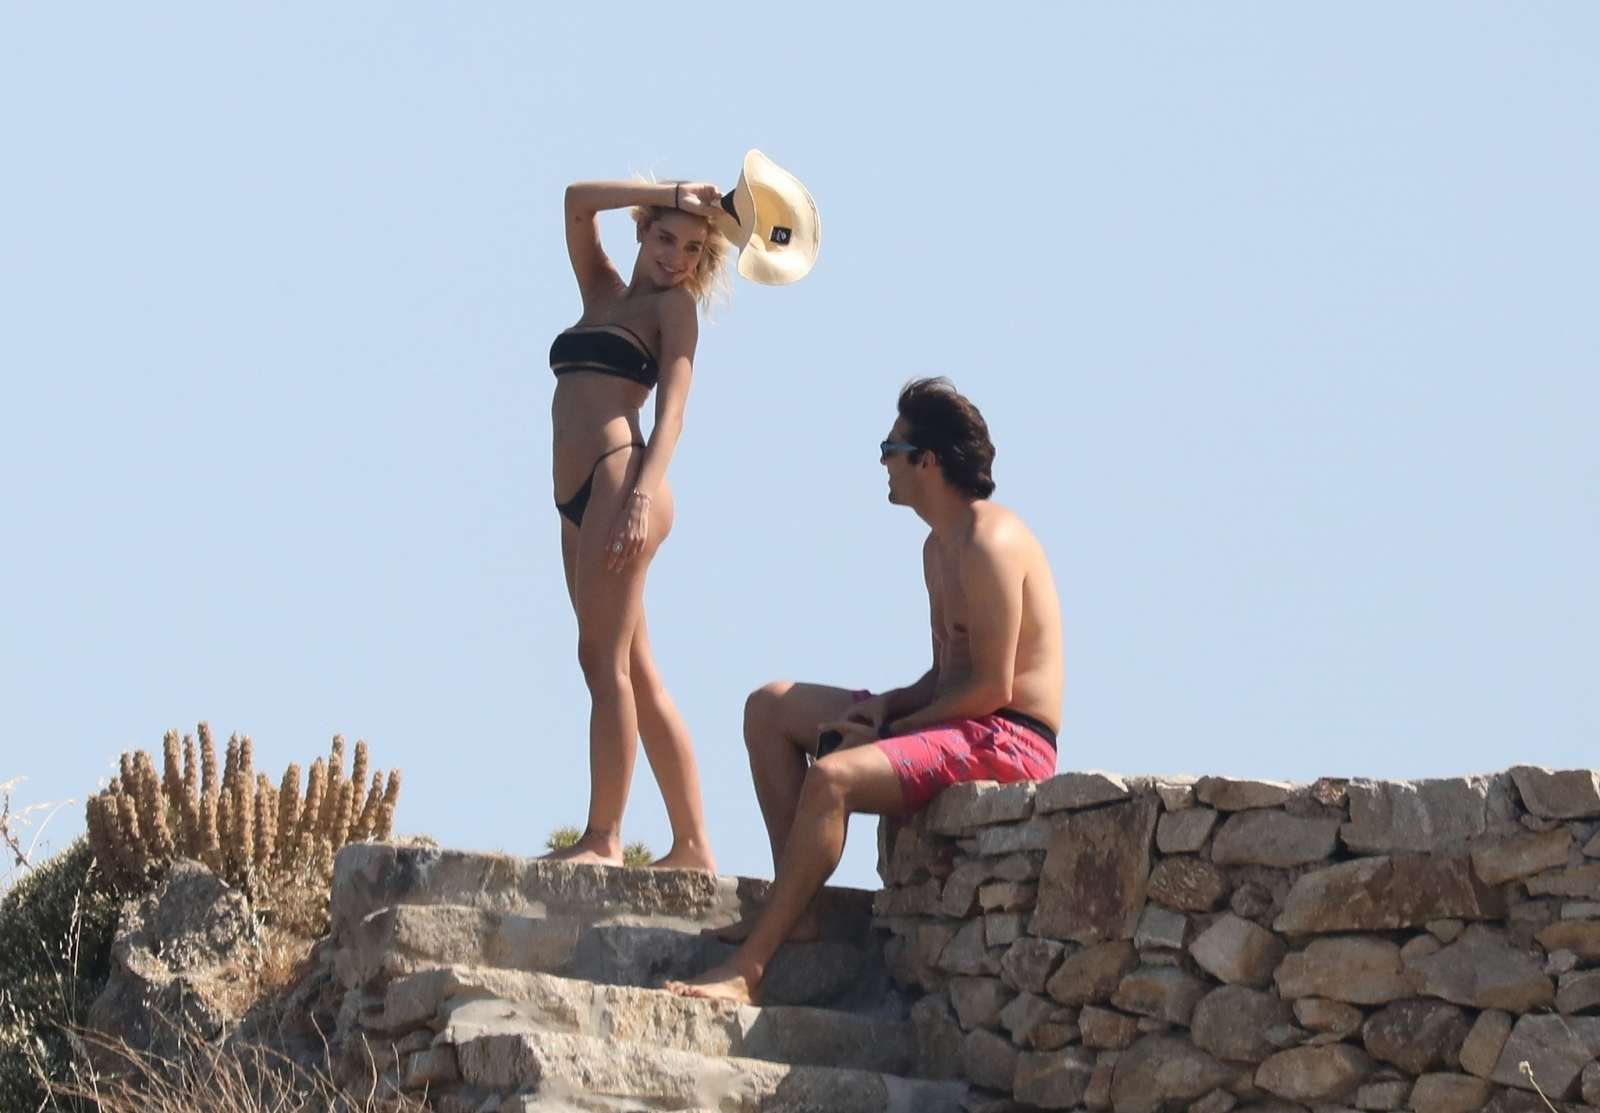 Carolina Dias with Ricardo Kaka on Nammos beach in Mykonos